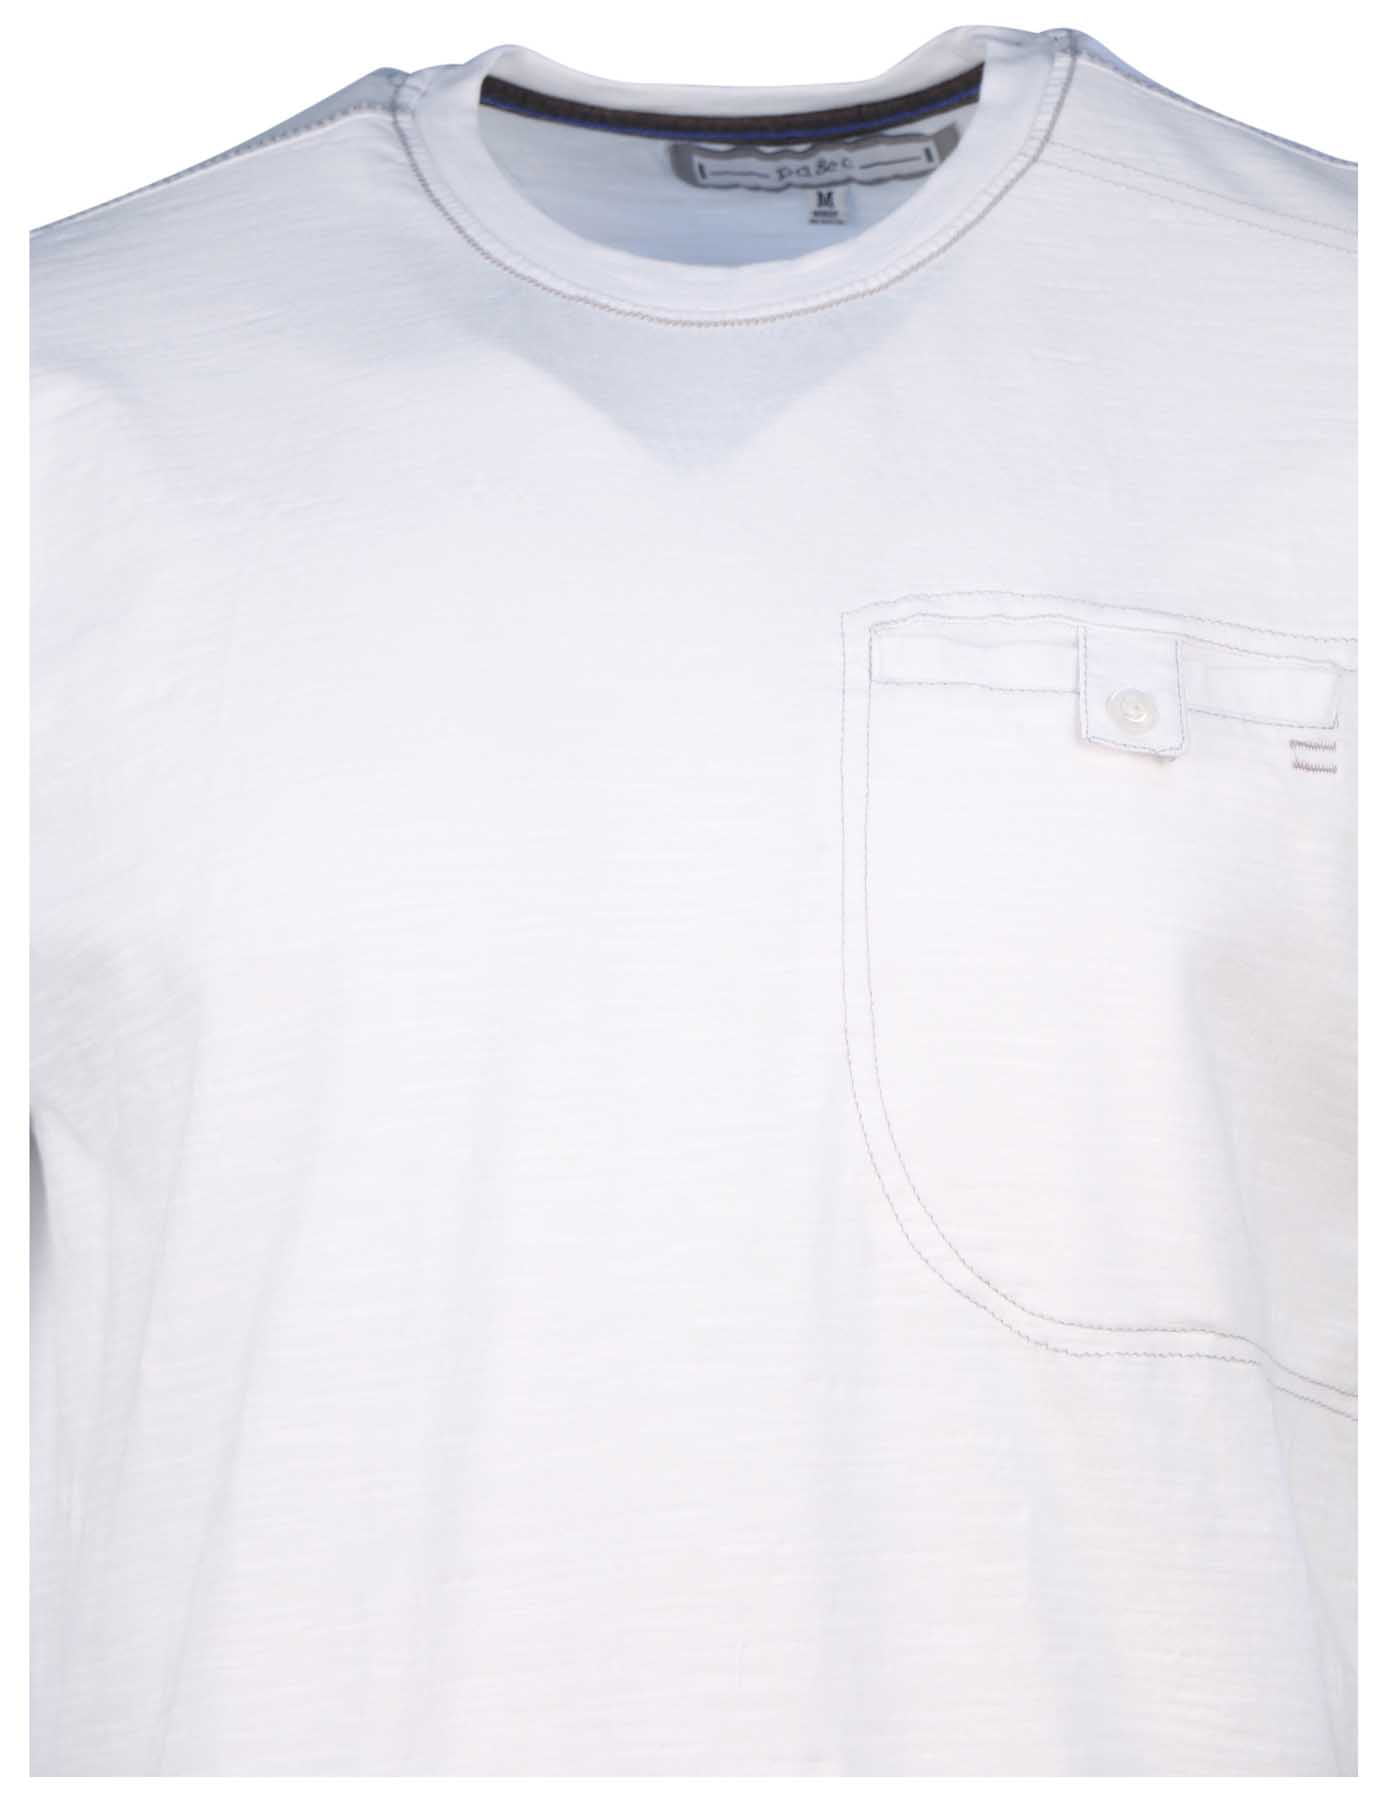 PD&C Men's Button Pocket Casual T-Shirt (White, Small) - Walmart.com